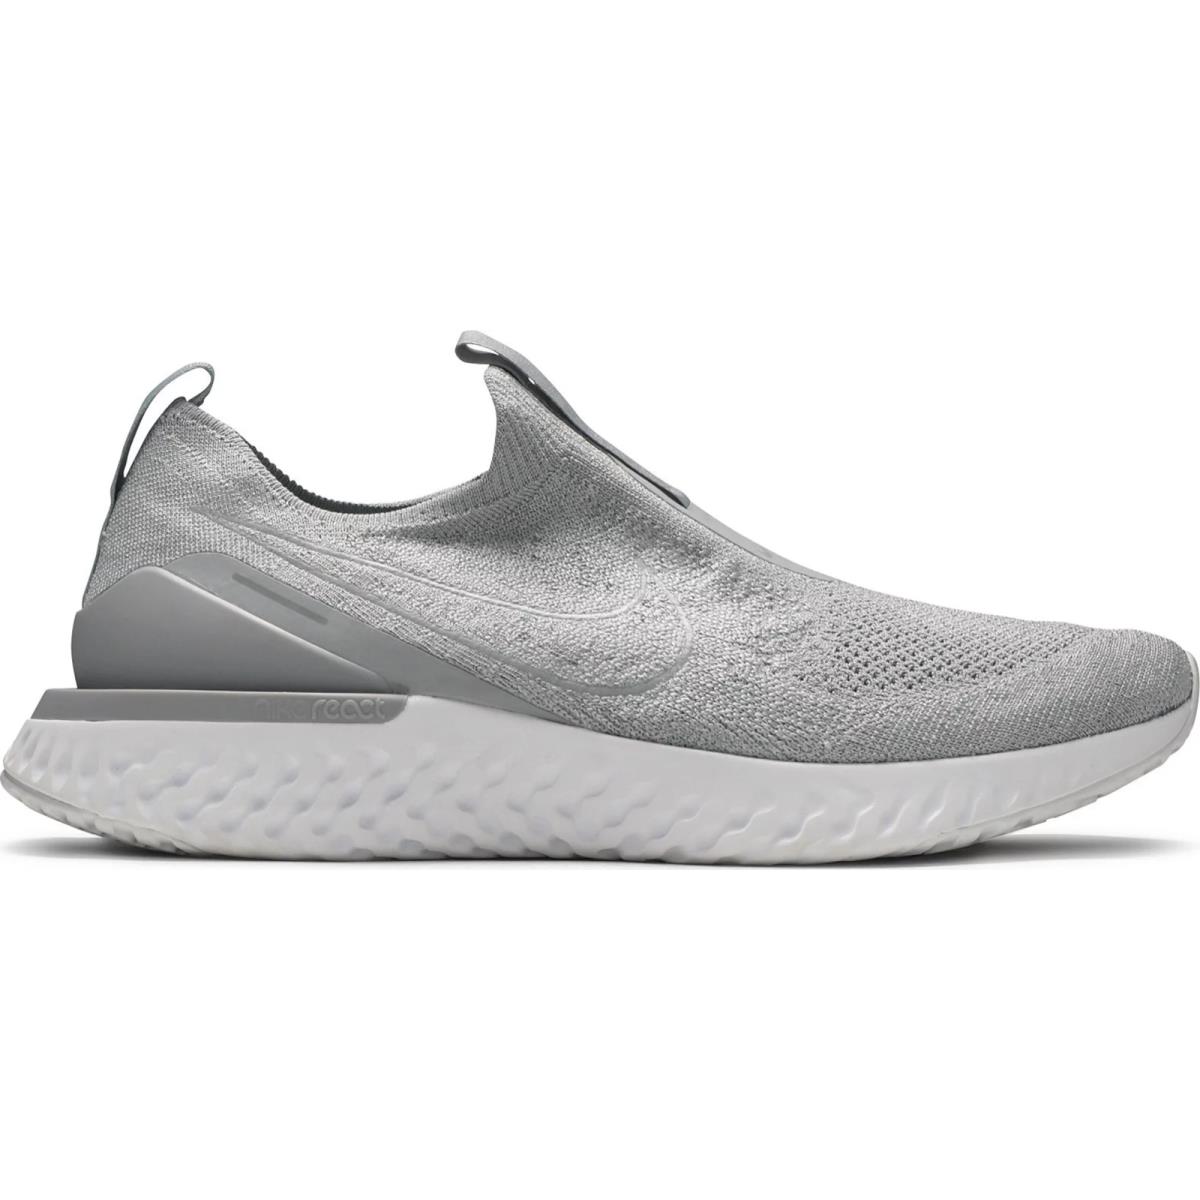 Nike Epic Phantom React Flyknit FK Wolf Grey White Shoes BV0417-003 Men`s 8.5 - Gray